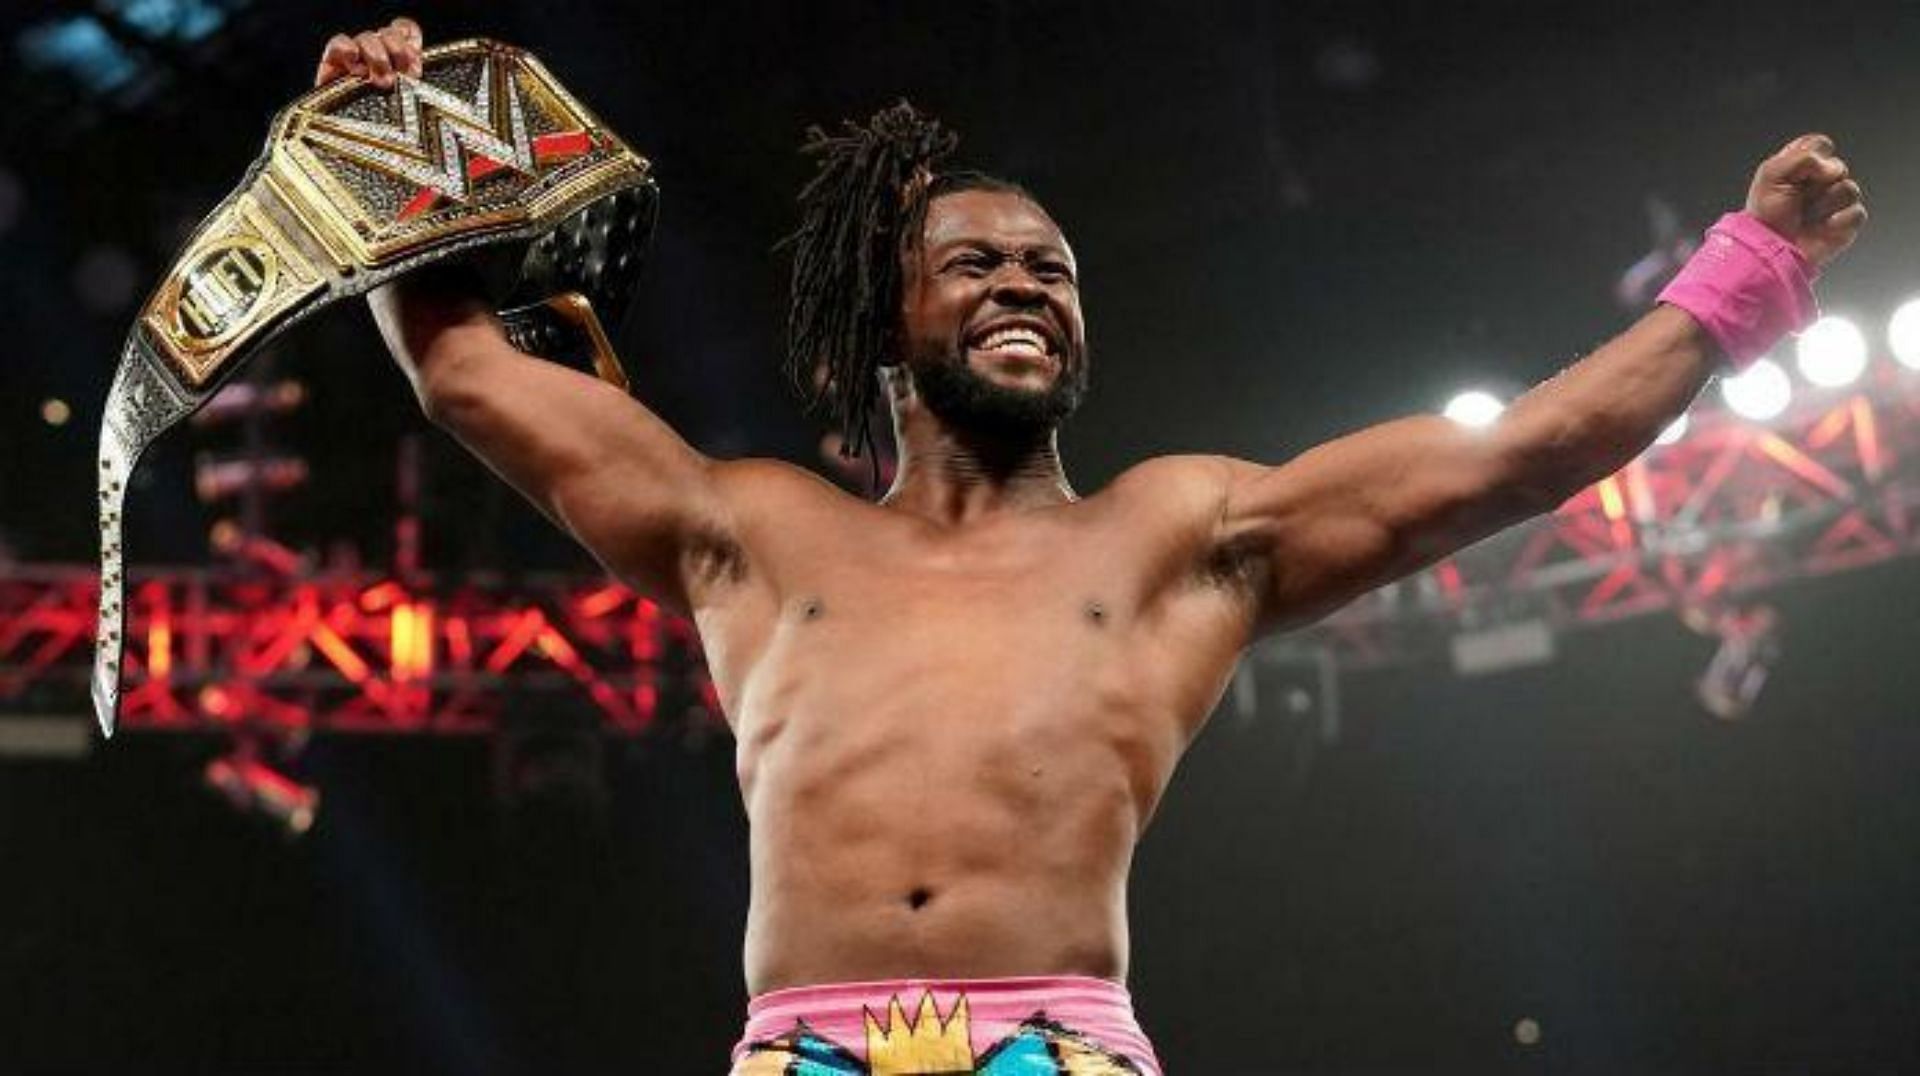 Kofi Kingston is the first African Born WWE Champion